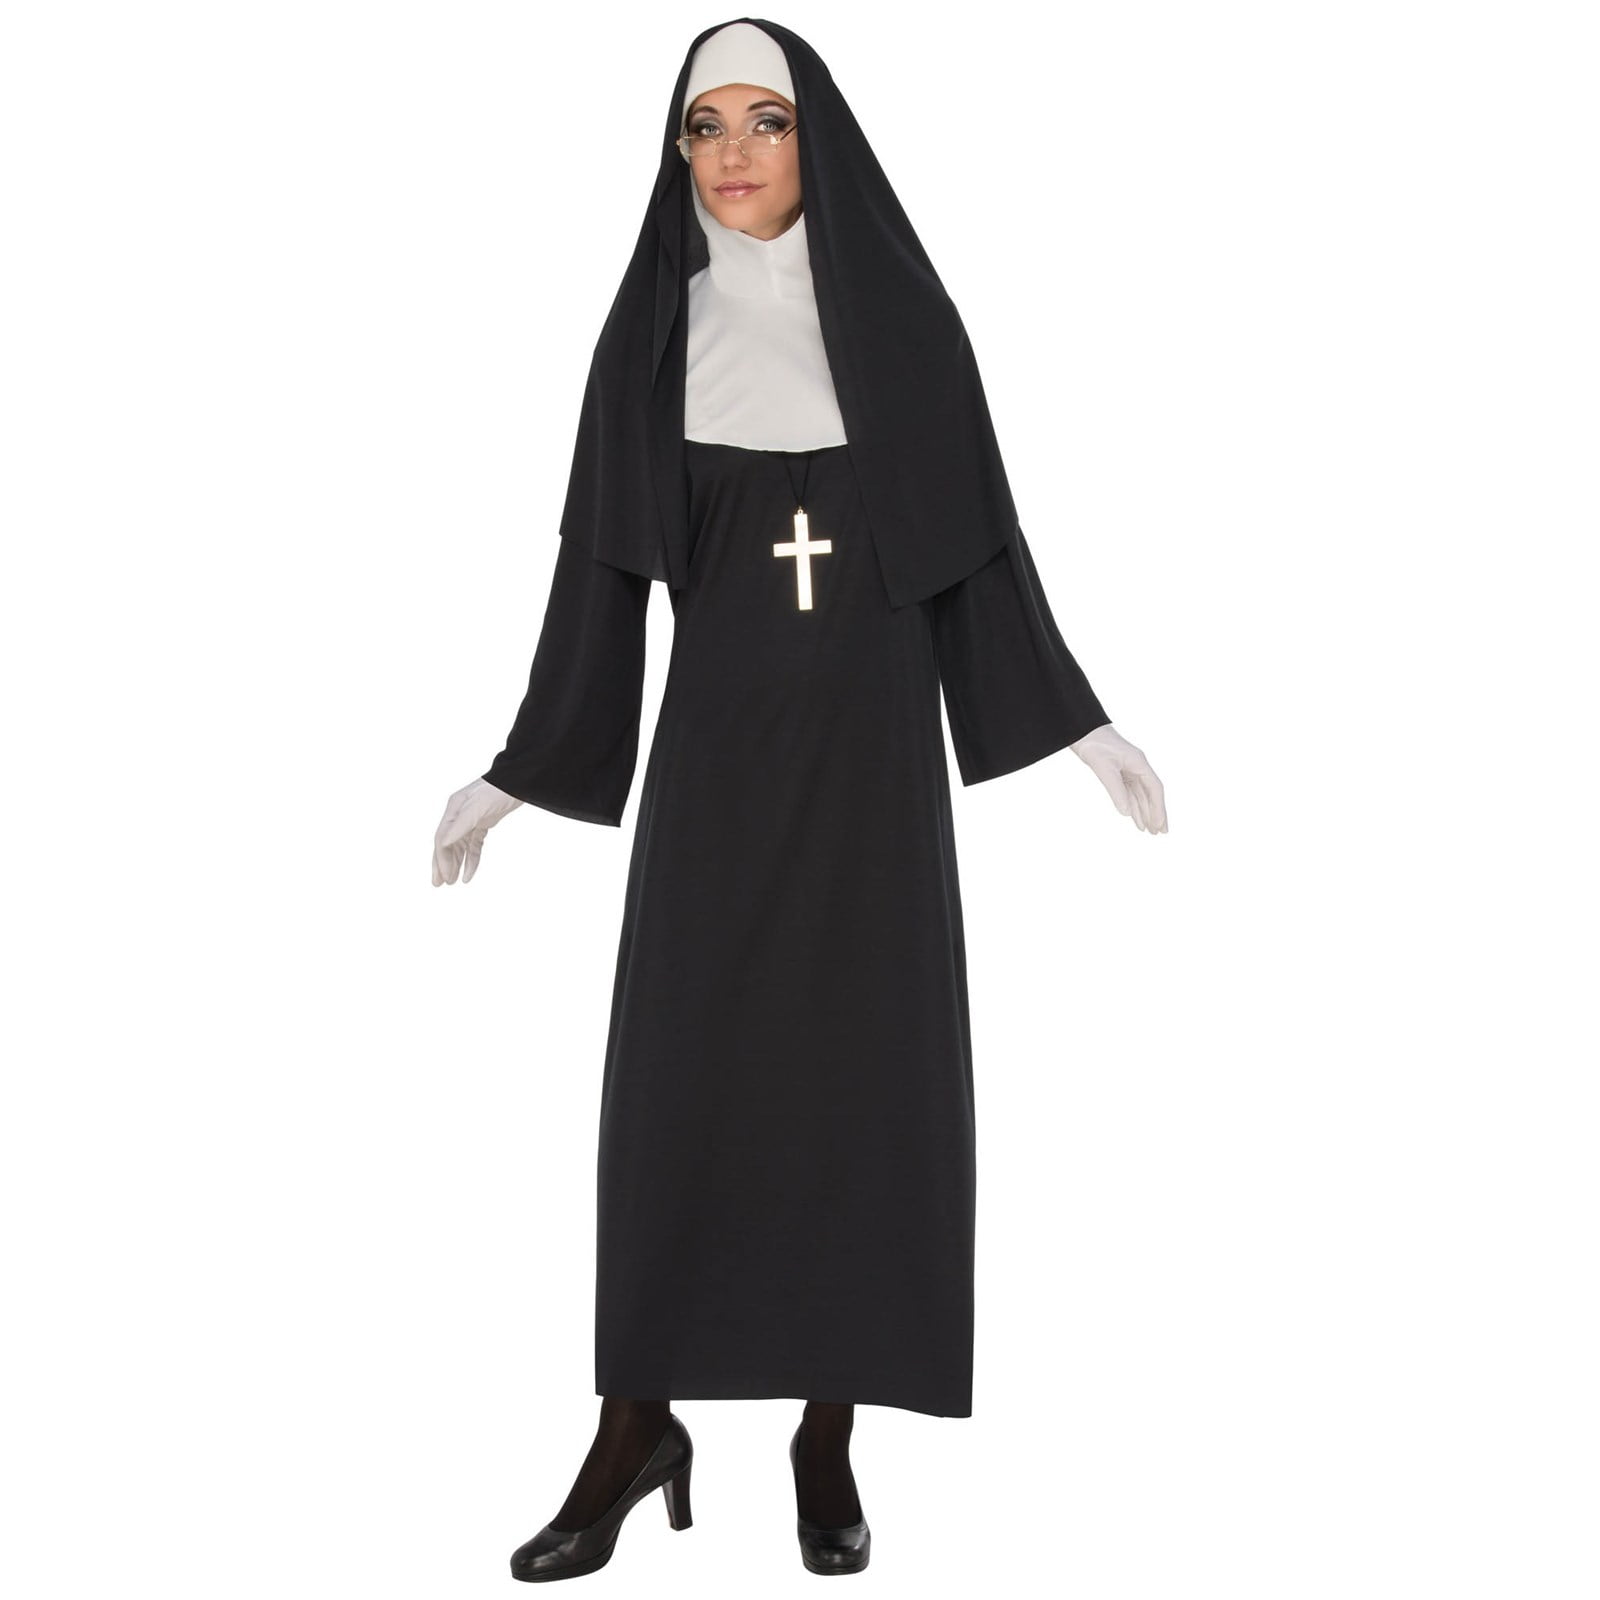 Leg Avenue womens Killer Nun bloody costume.